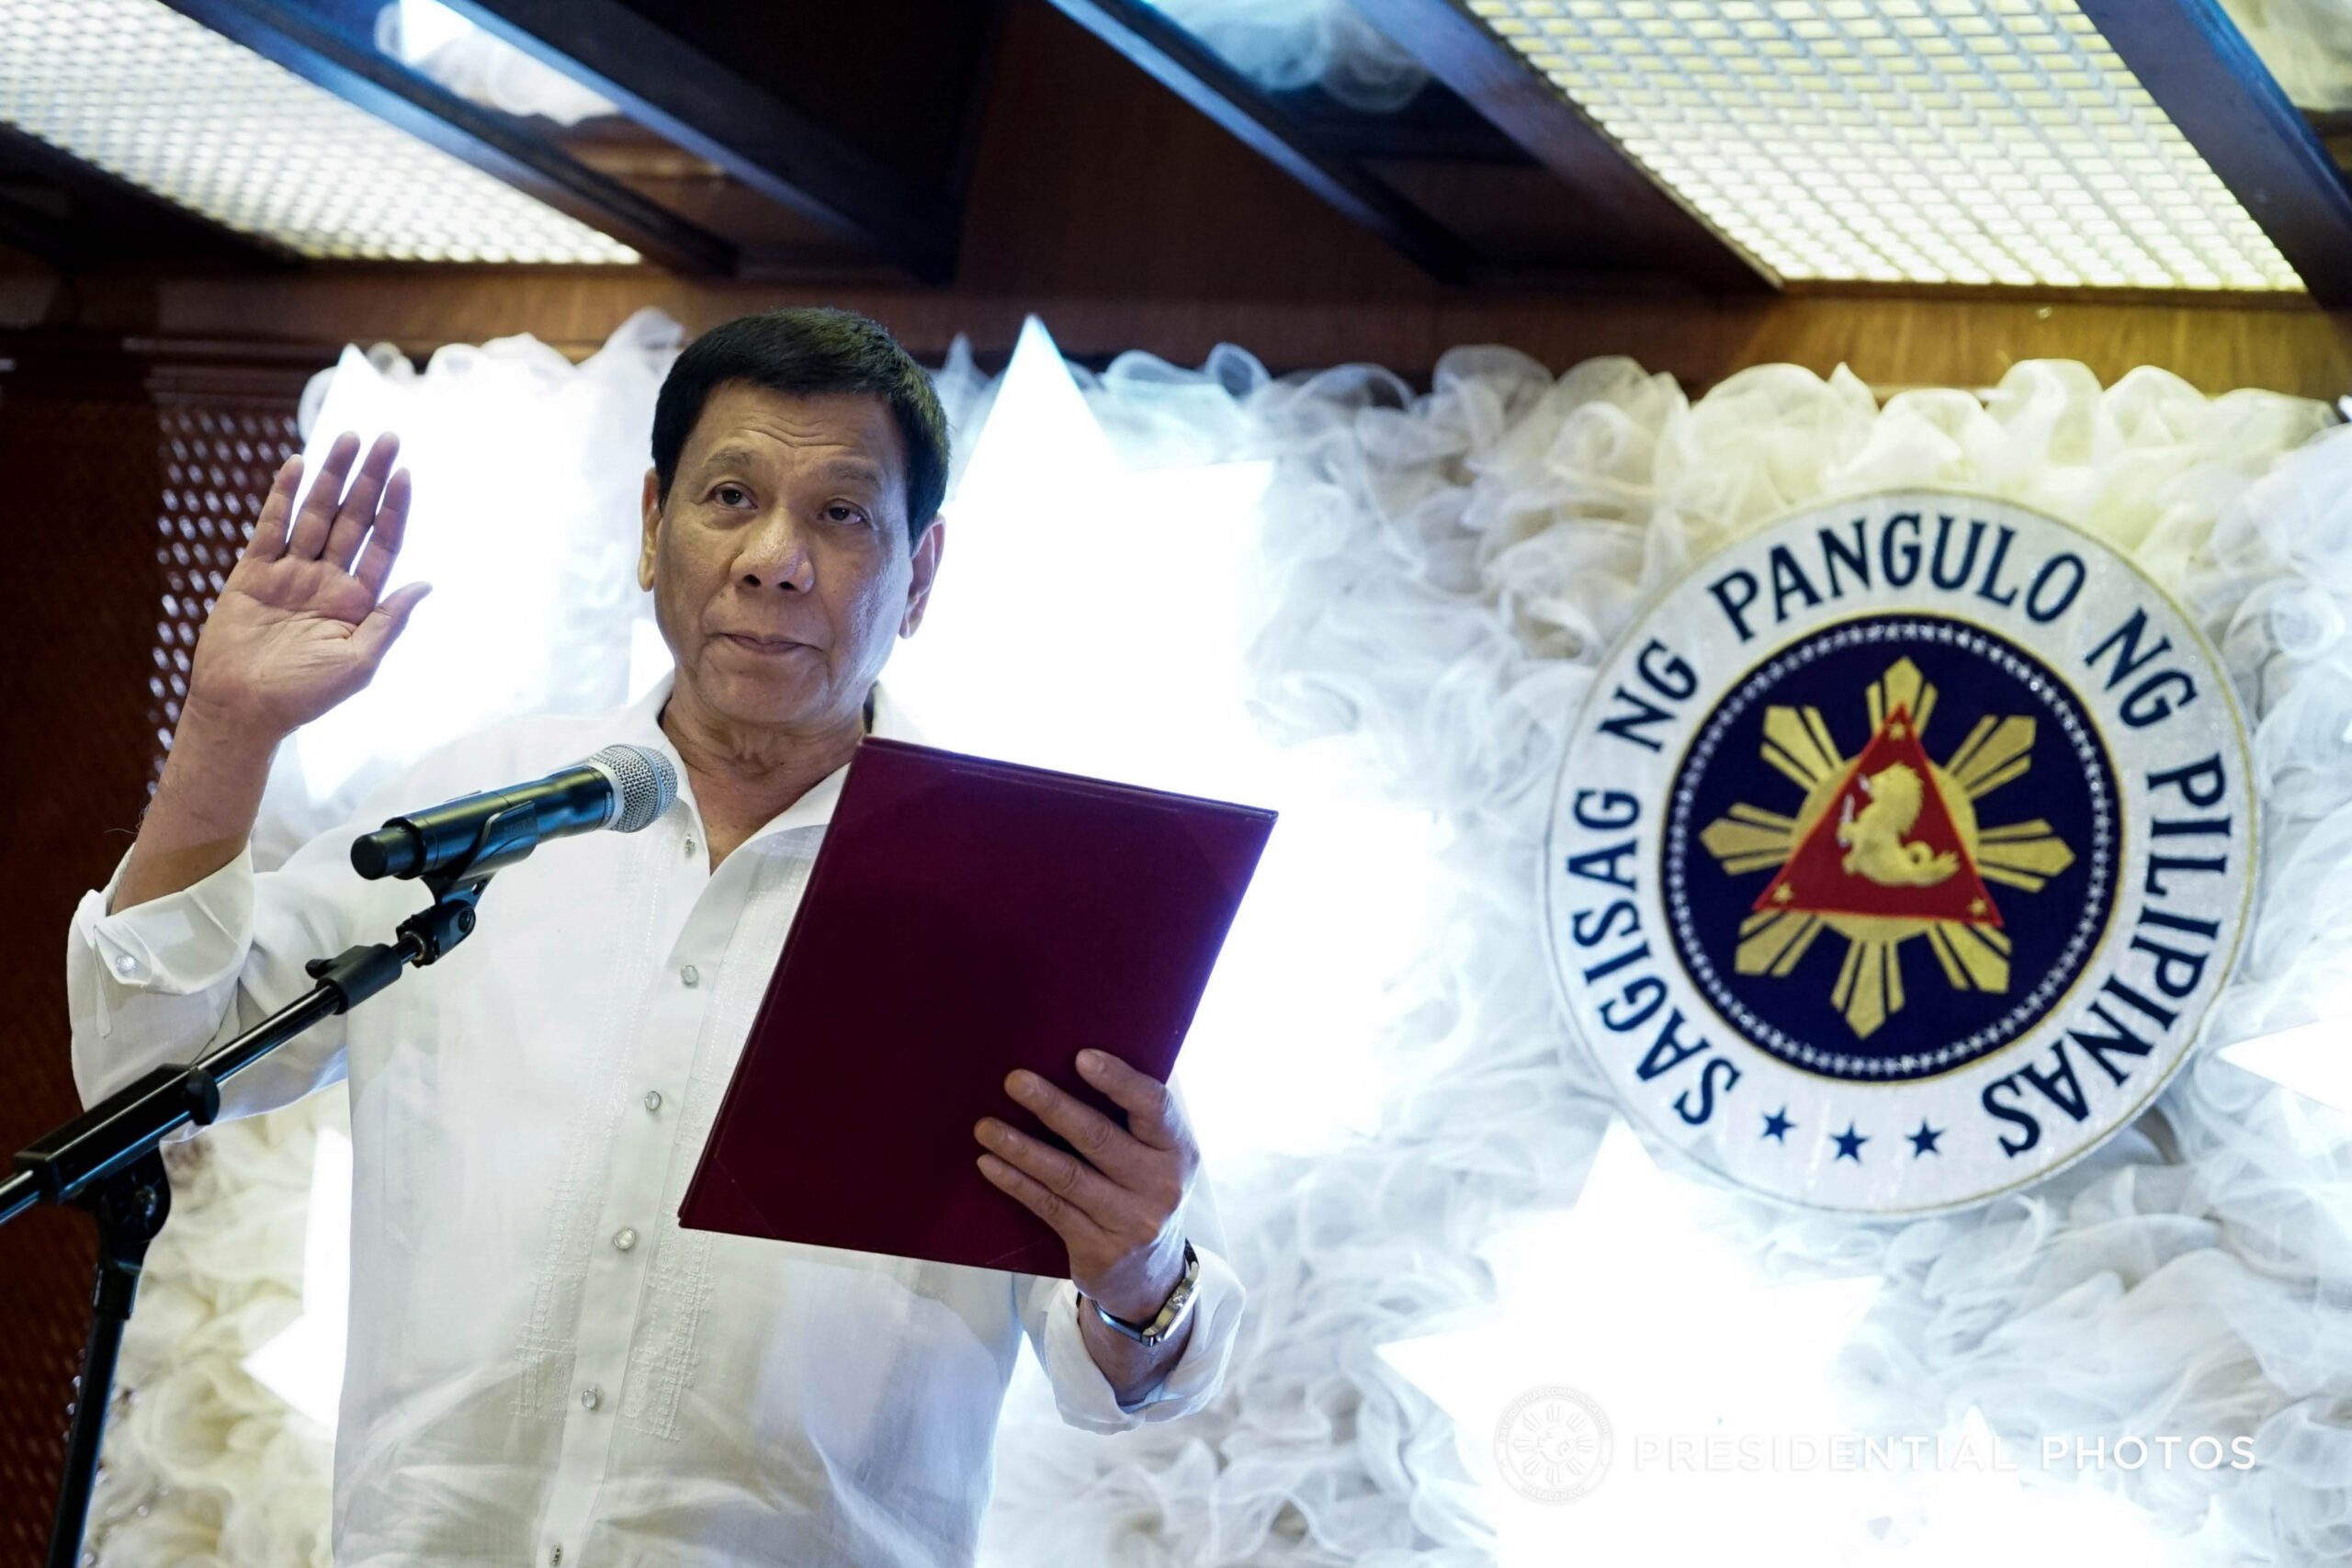 Don’t become a Judas like Trillanes, Duterte tells gov’t officials